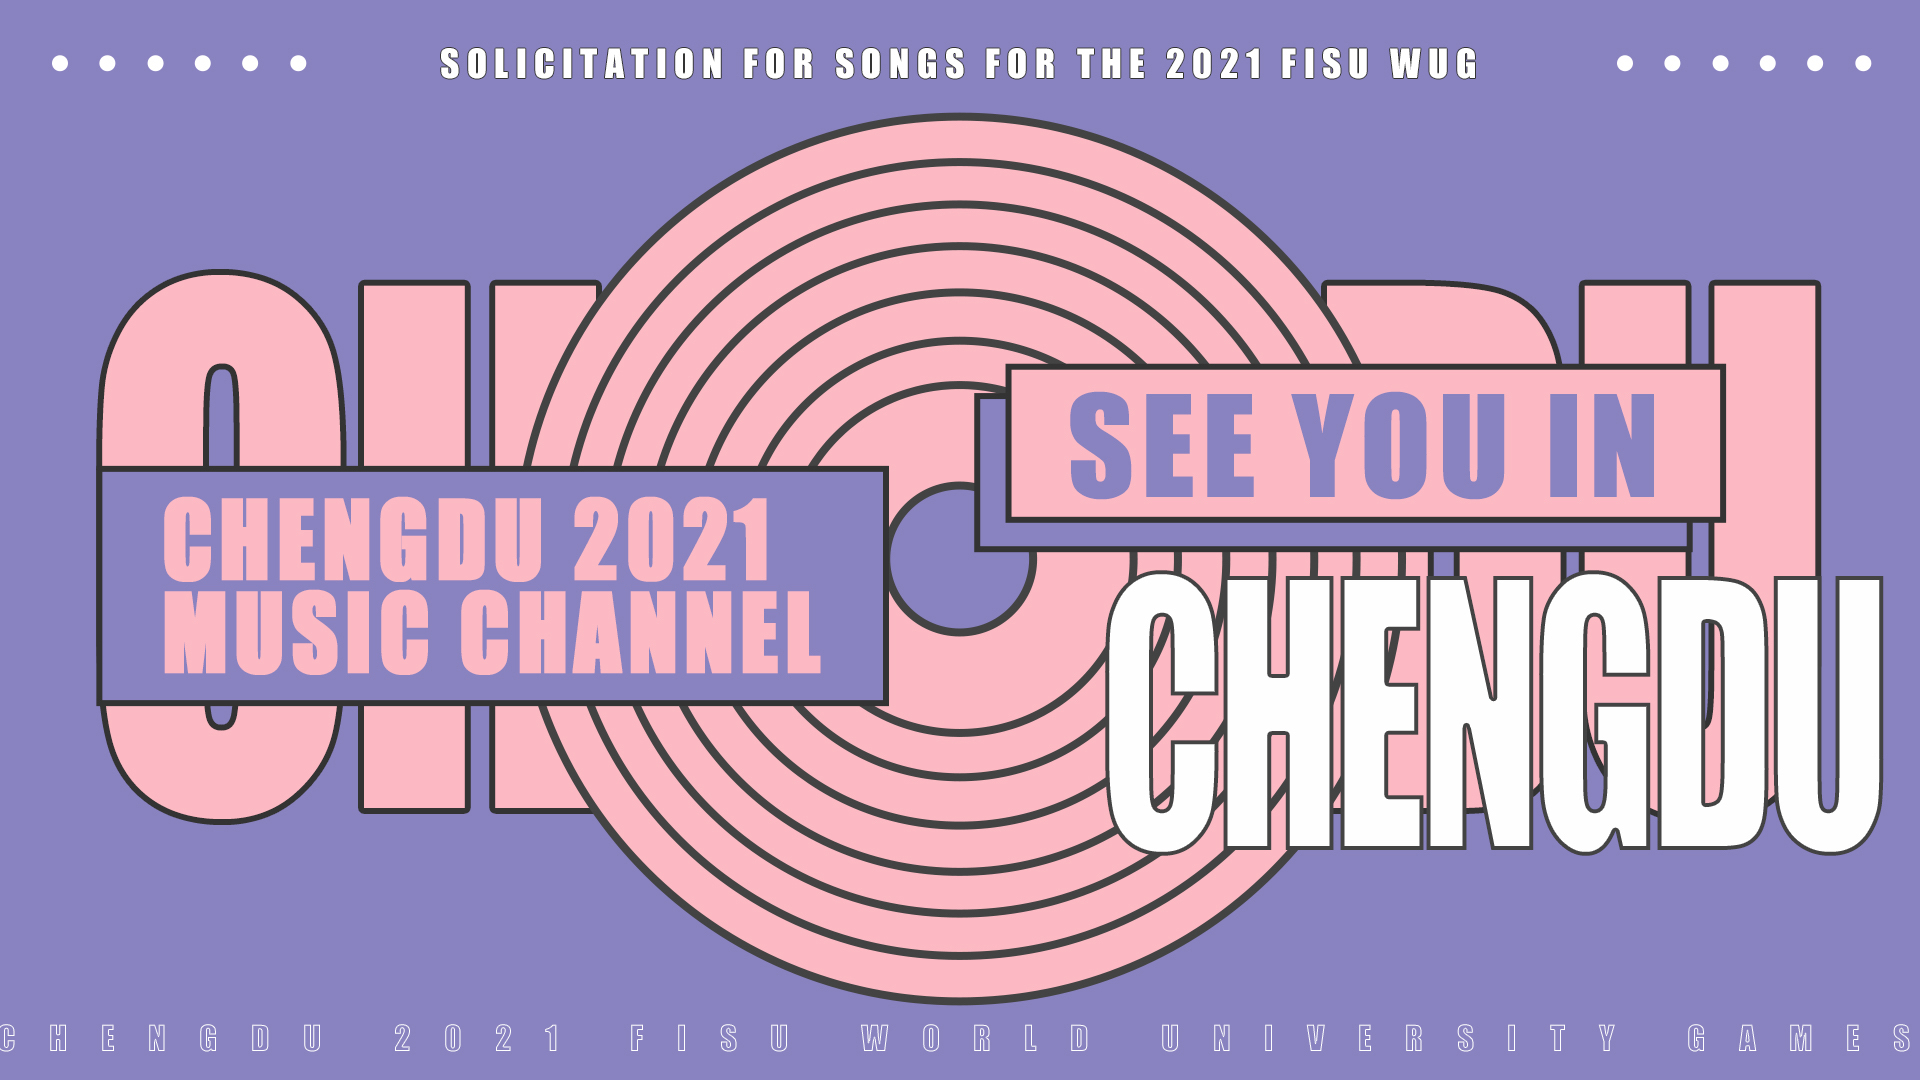 Music Channel of Chendu 2021